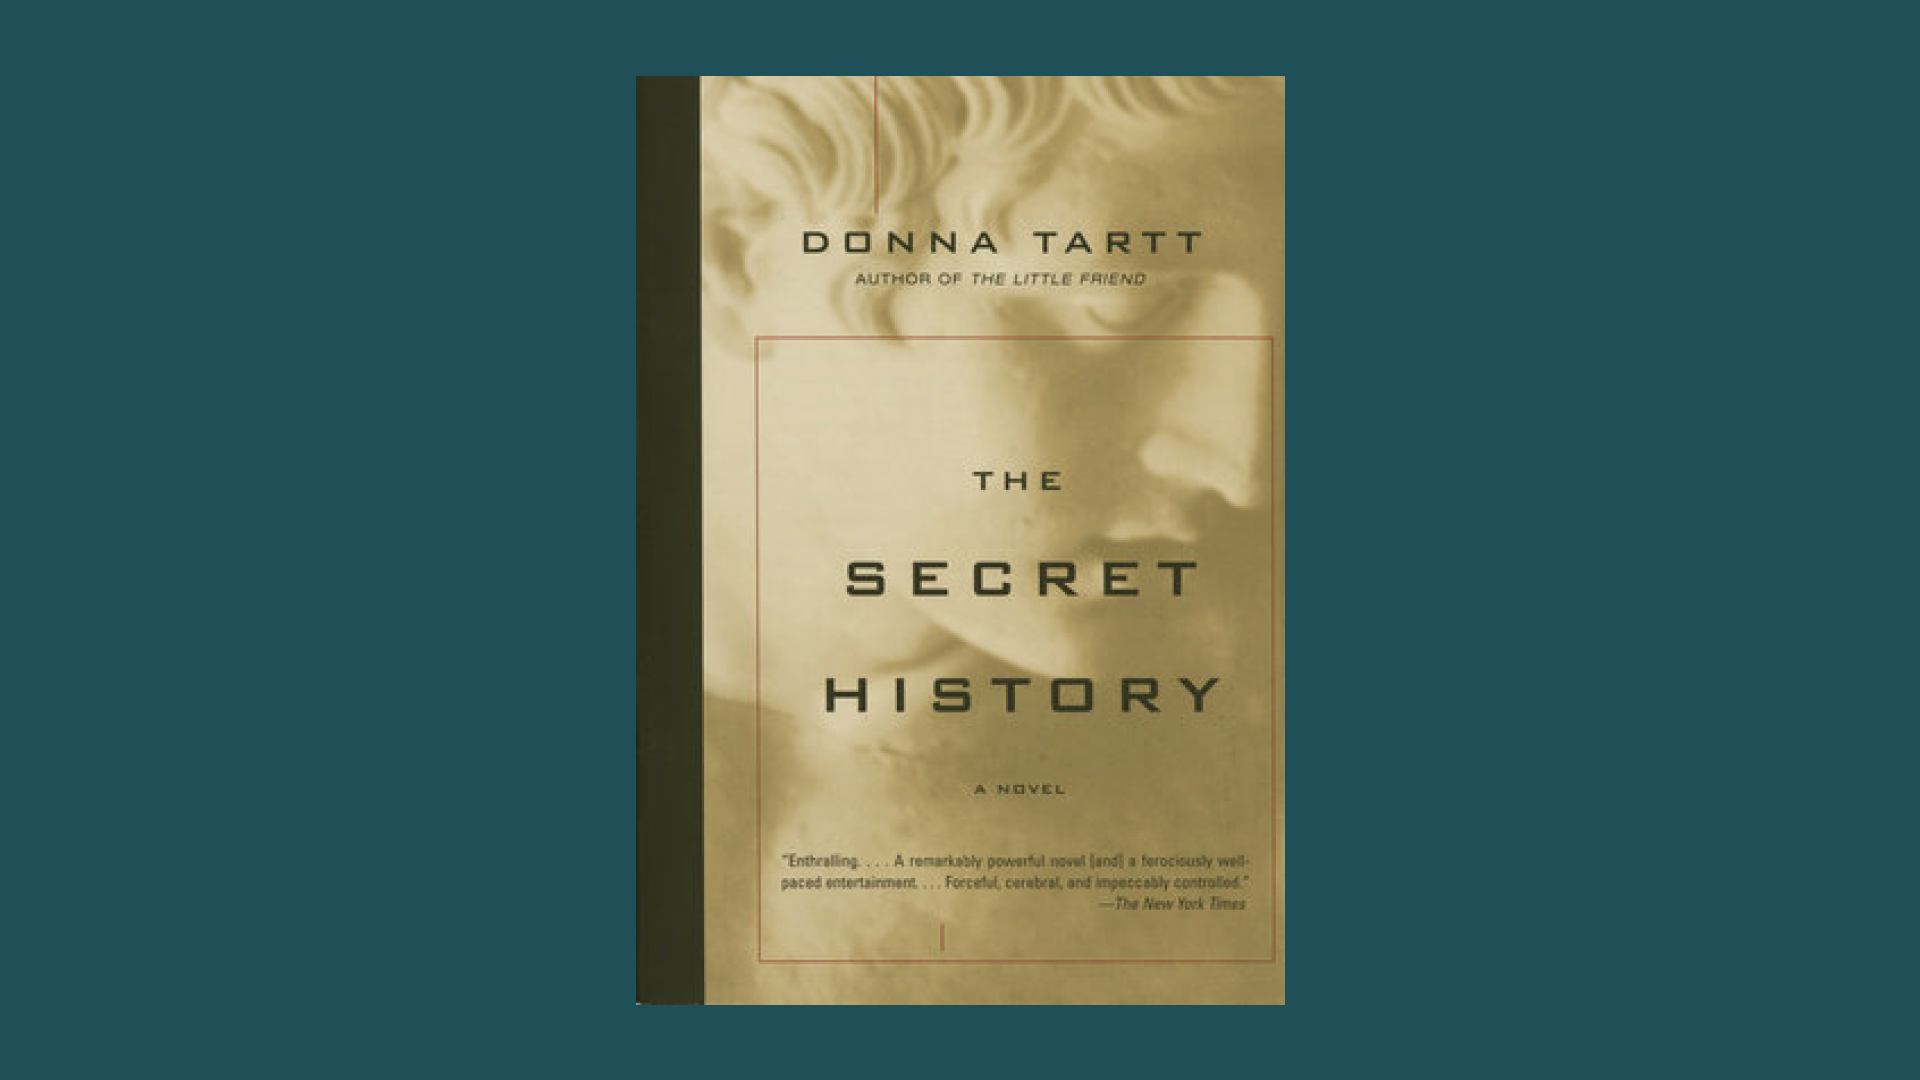 “The Secret History” by Donna Tartt